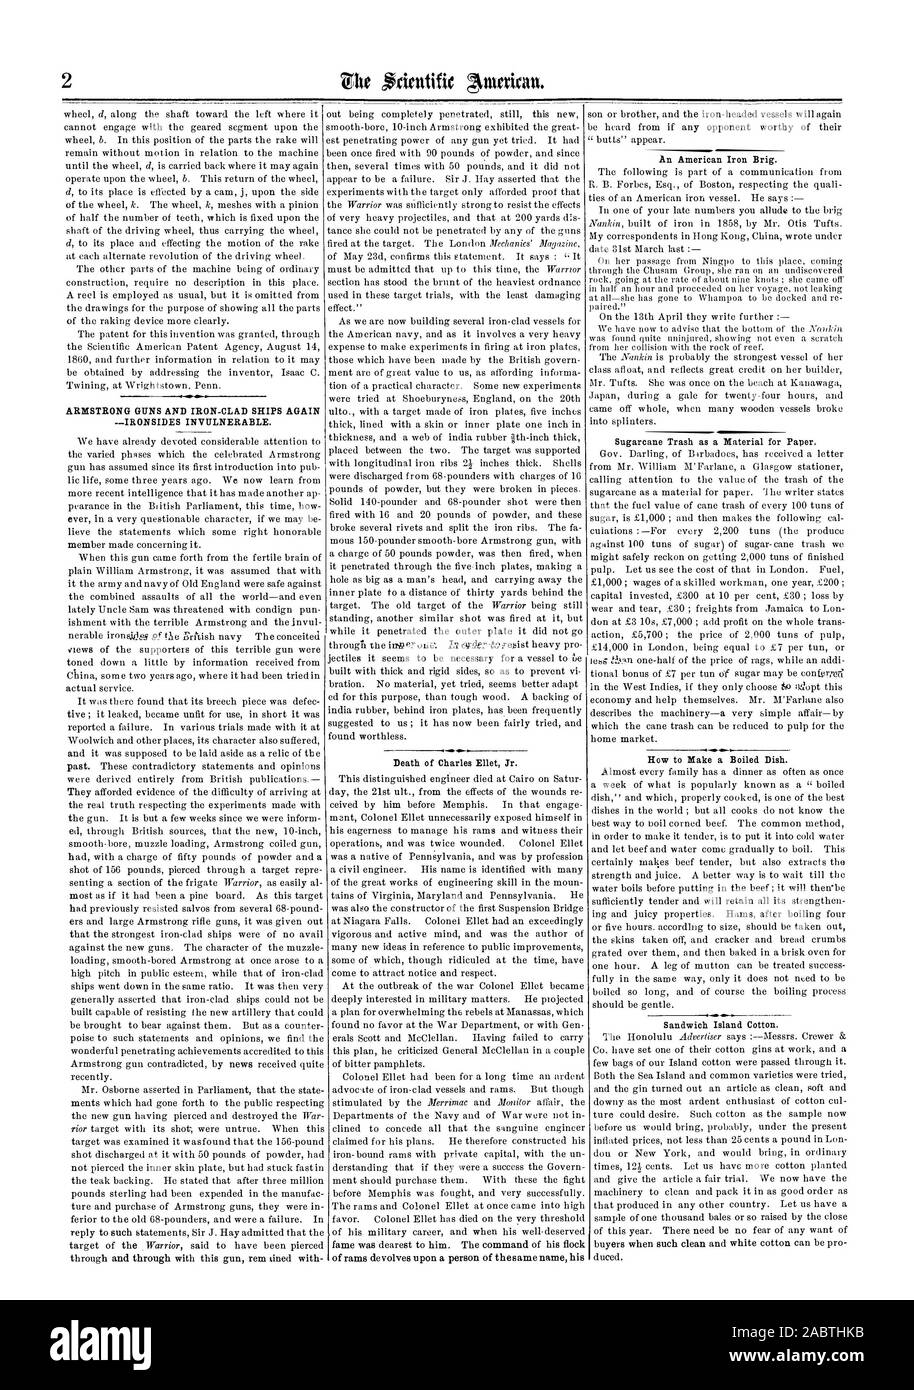 Scientific American, 1862-07-05 Foto de stock